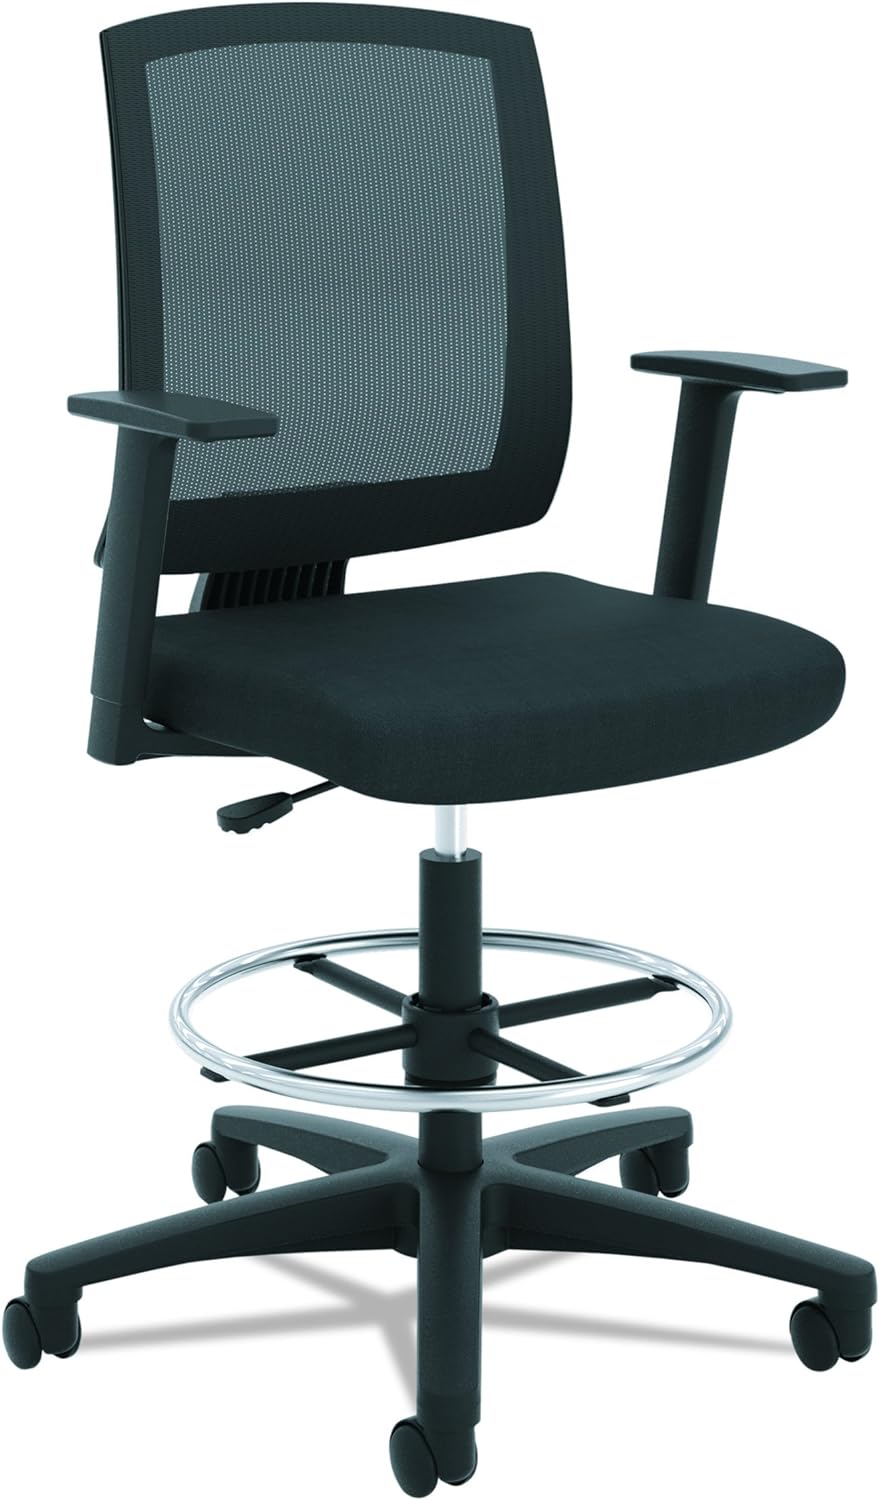 Hon Torch Mesh Task Stool - Mid Back Chair for Table or Desk, Black (HVL515)